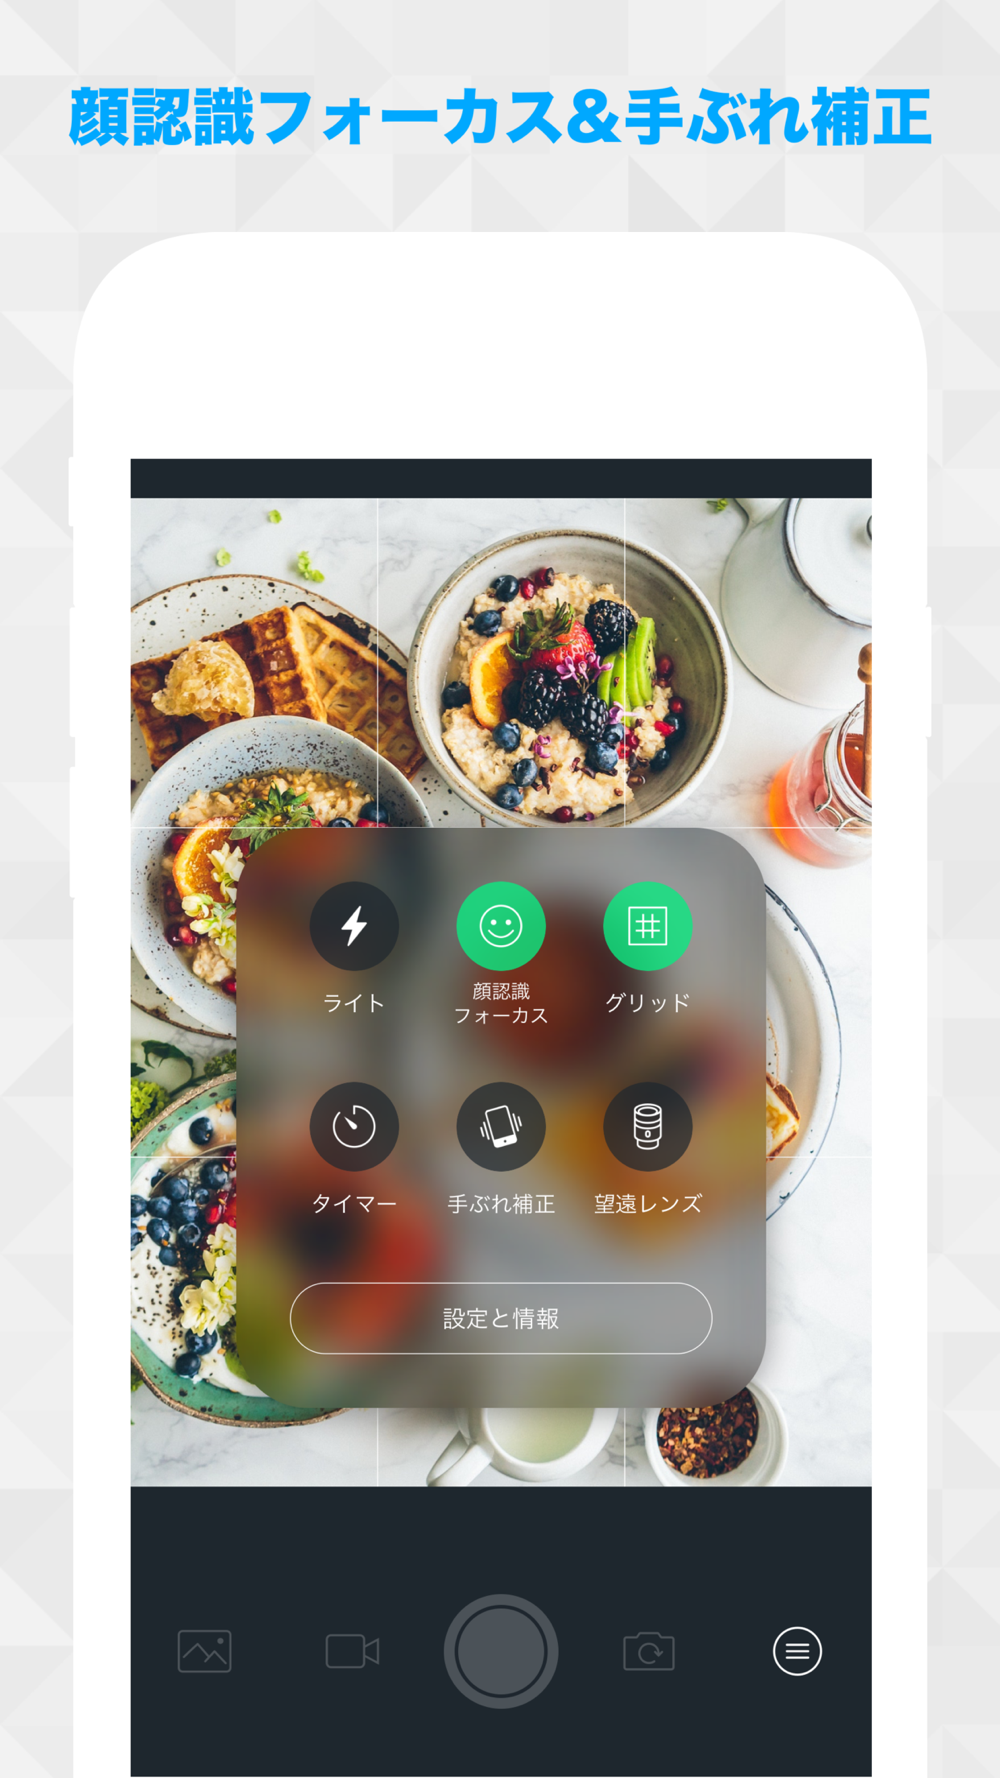 Camera0 無音高画質マナーカメラアプリ Download App For Iphone Steprimo Com